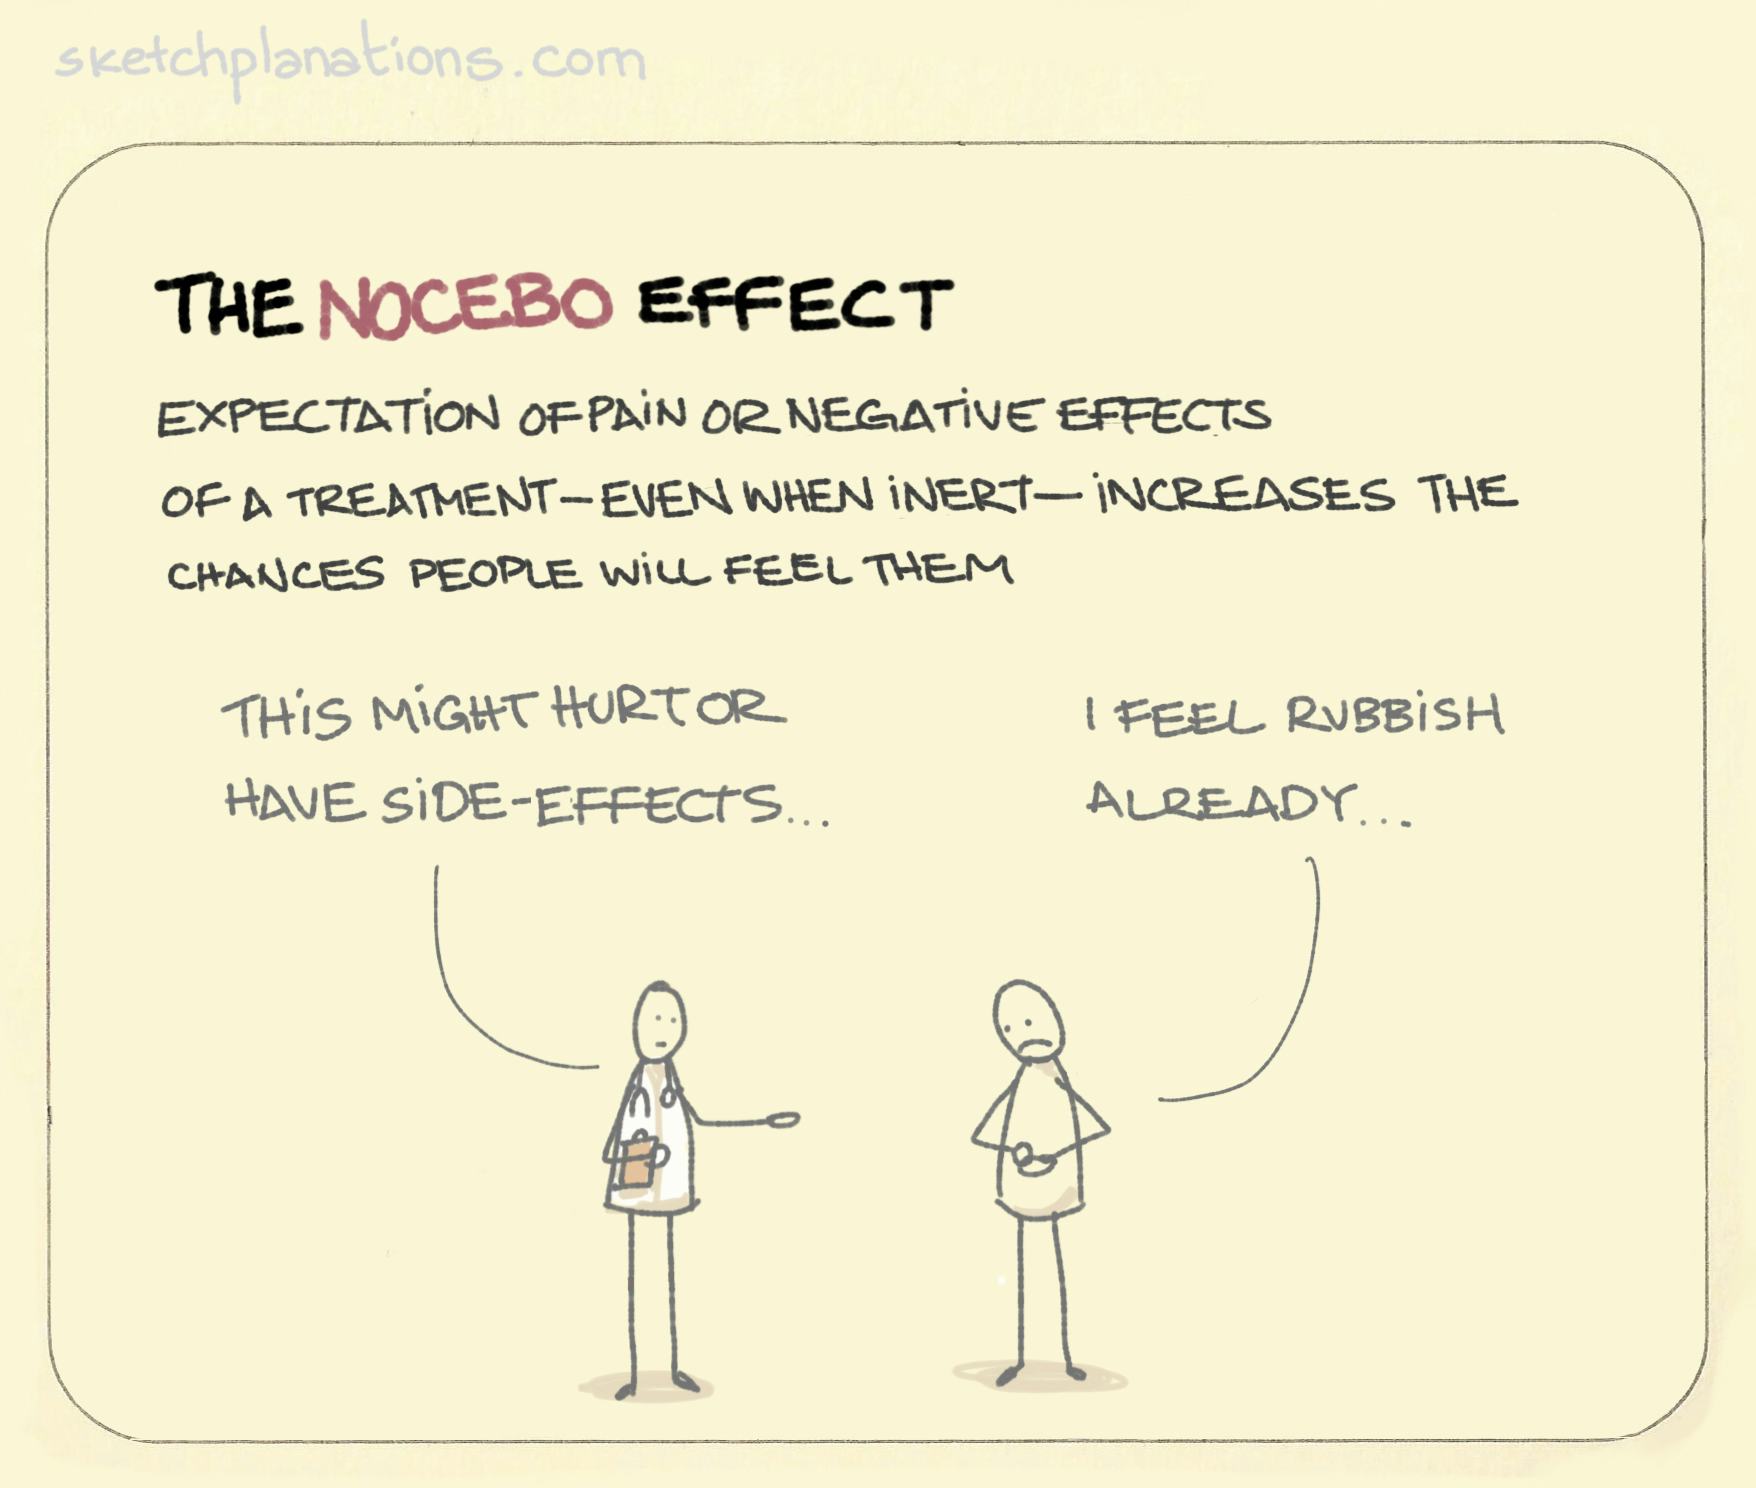 The nocebo effect - Sketchplanations